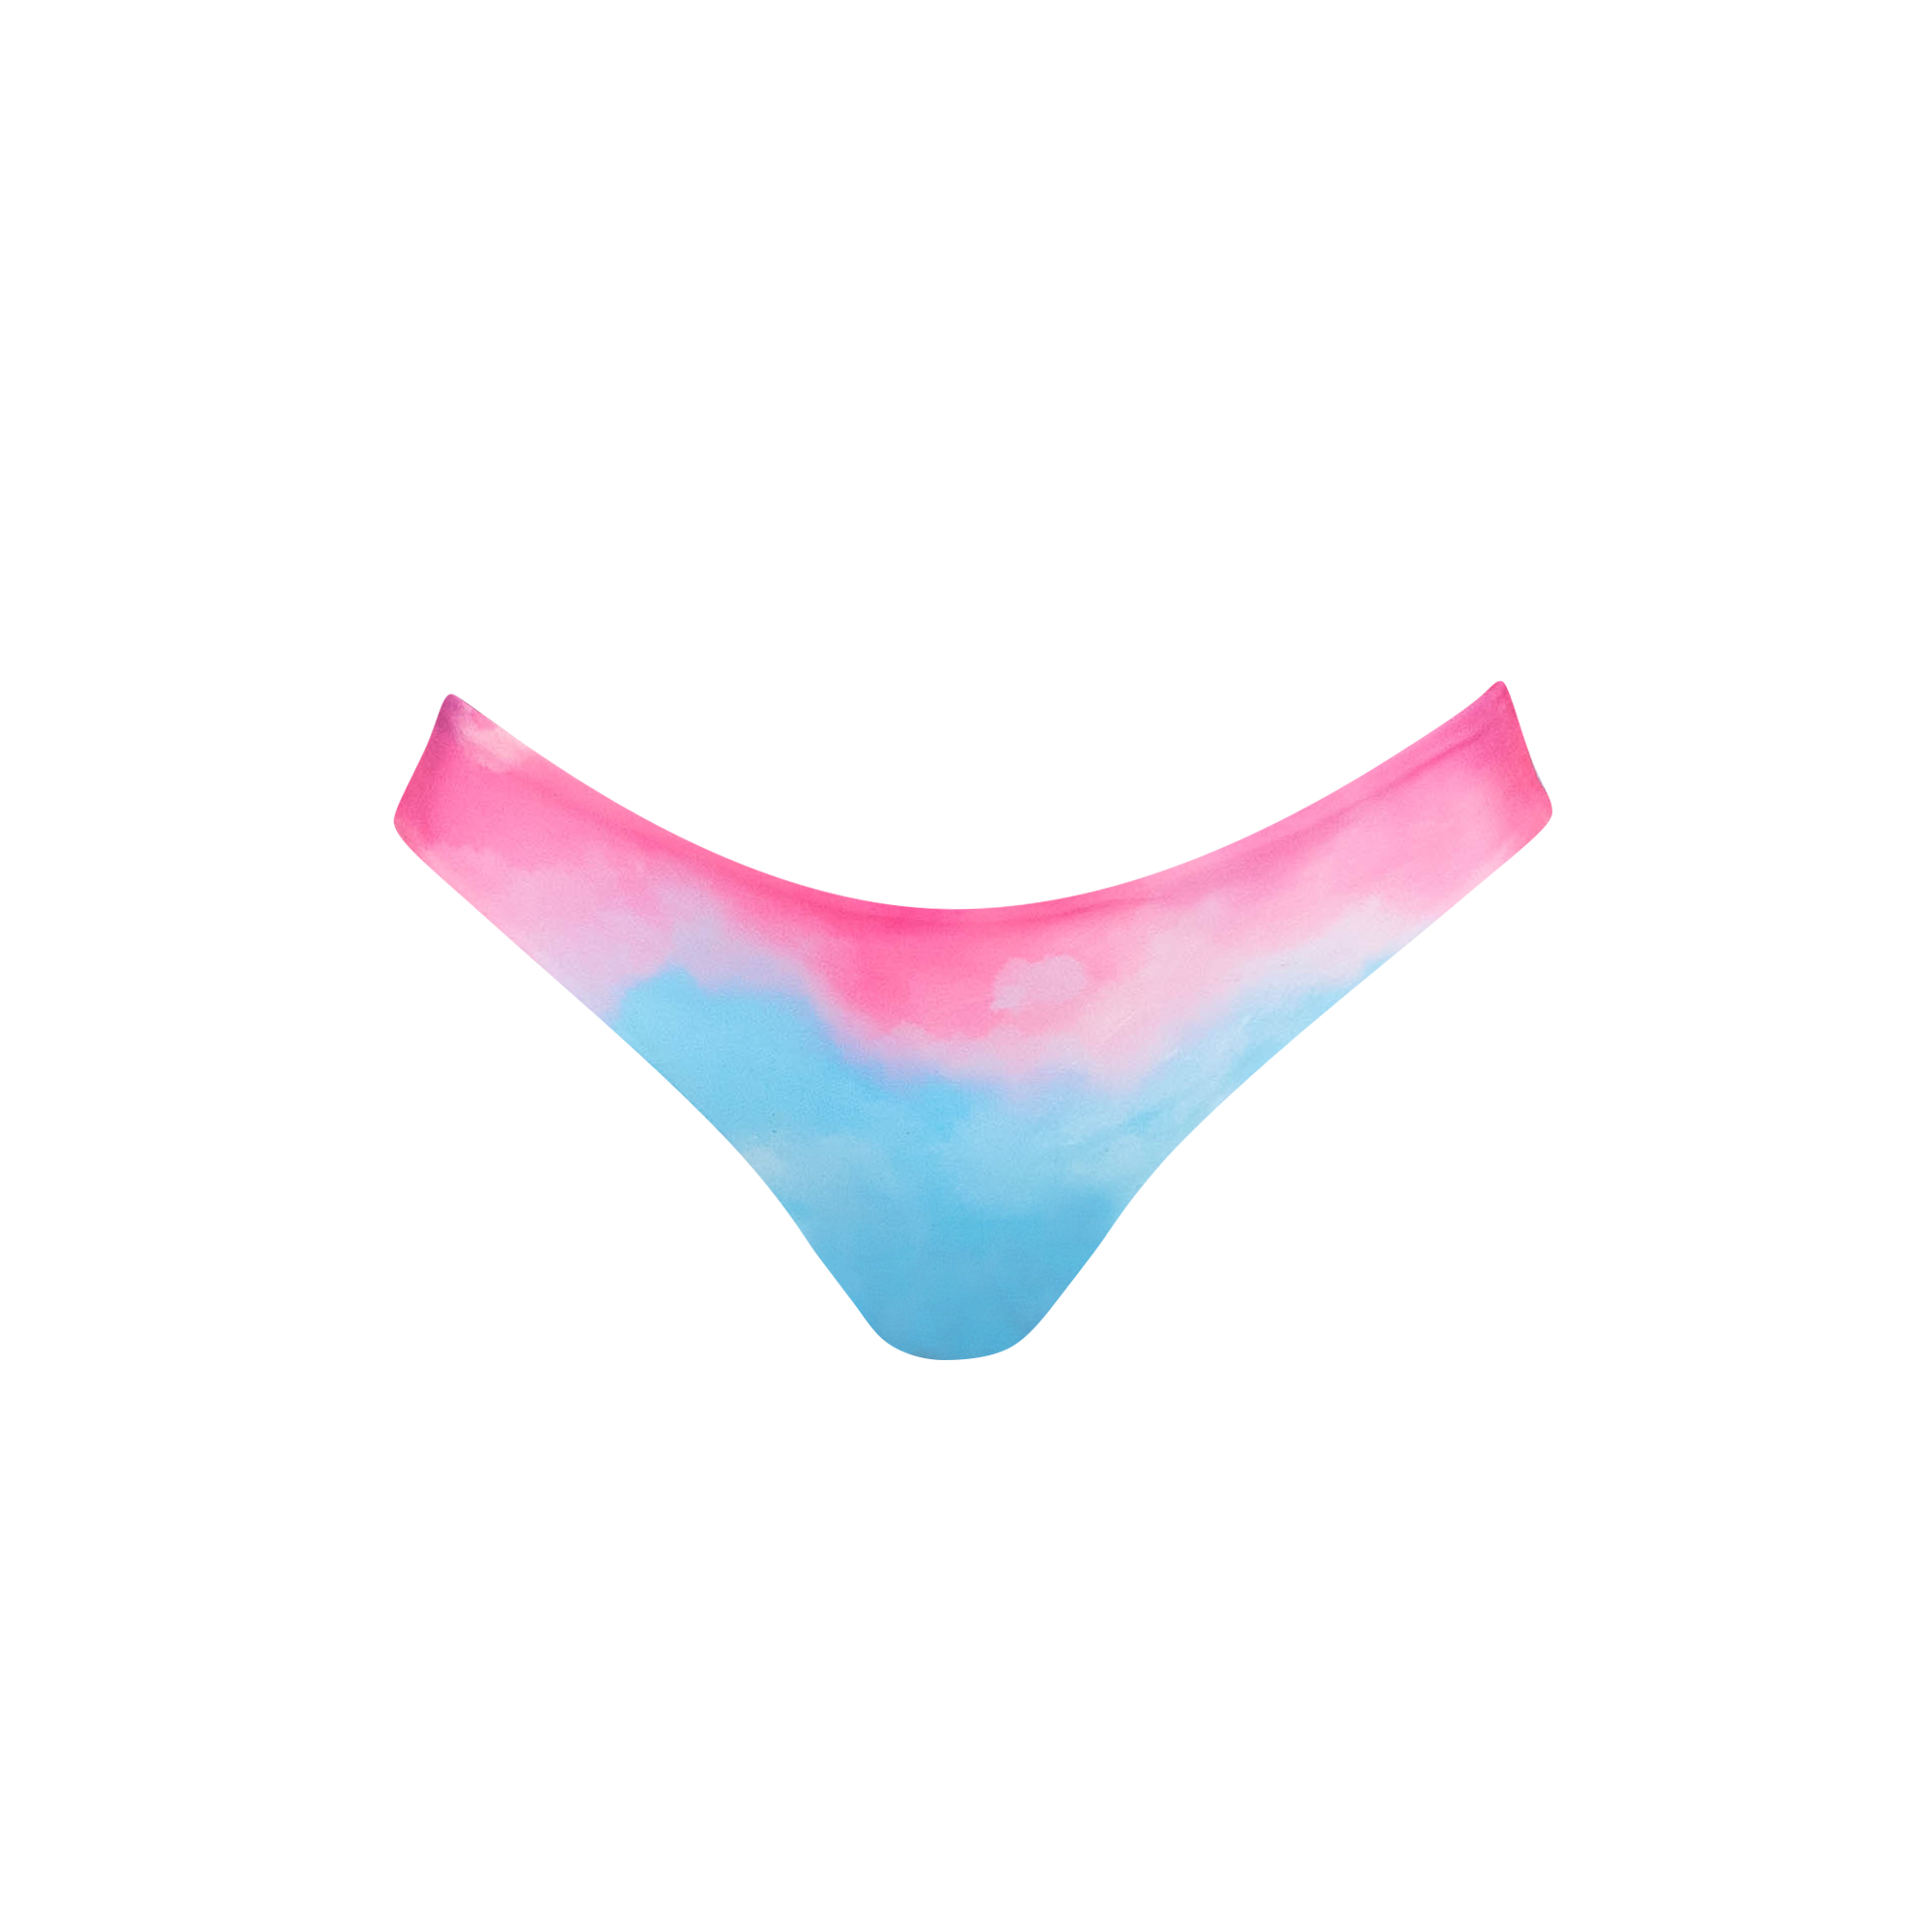 Lilac Luxe - Strappy Thong Bikini Bottom – Haikini